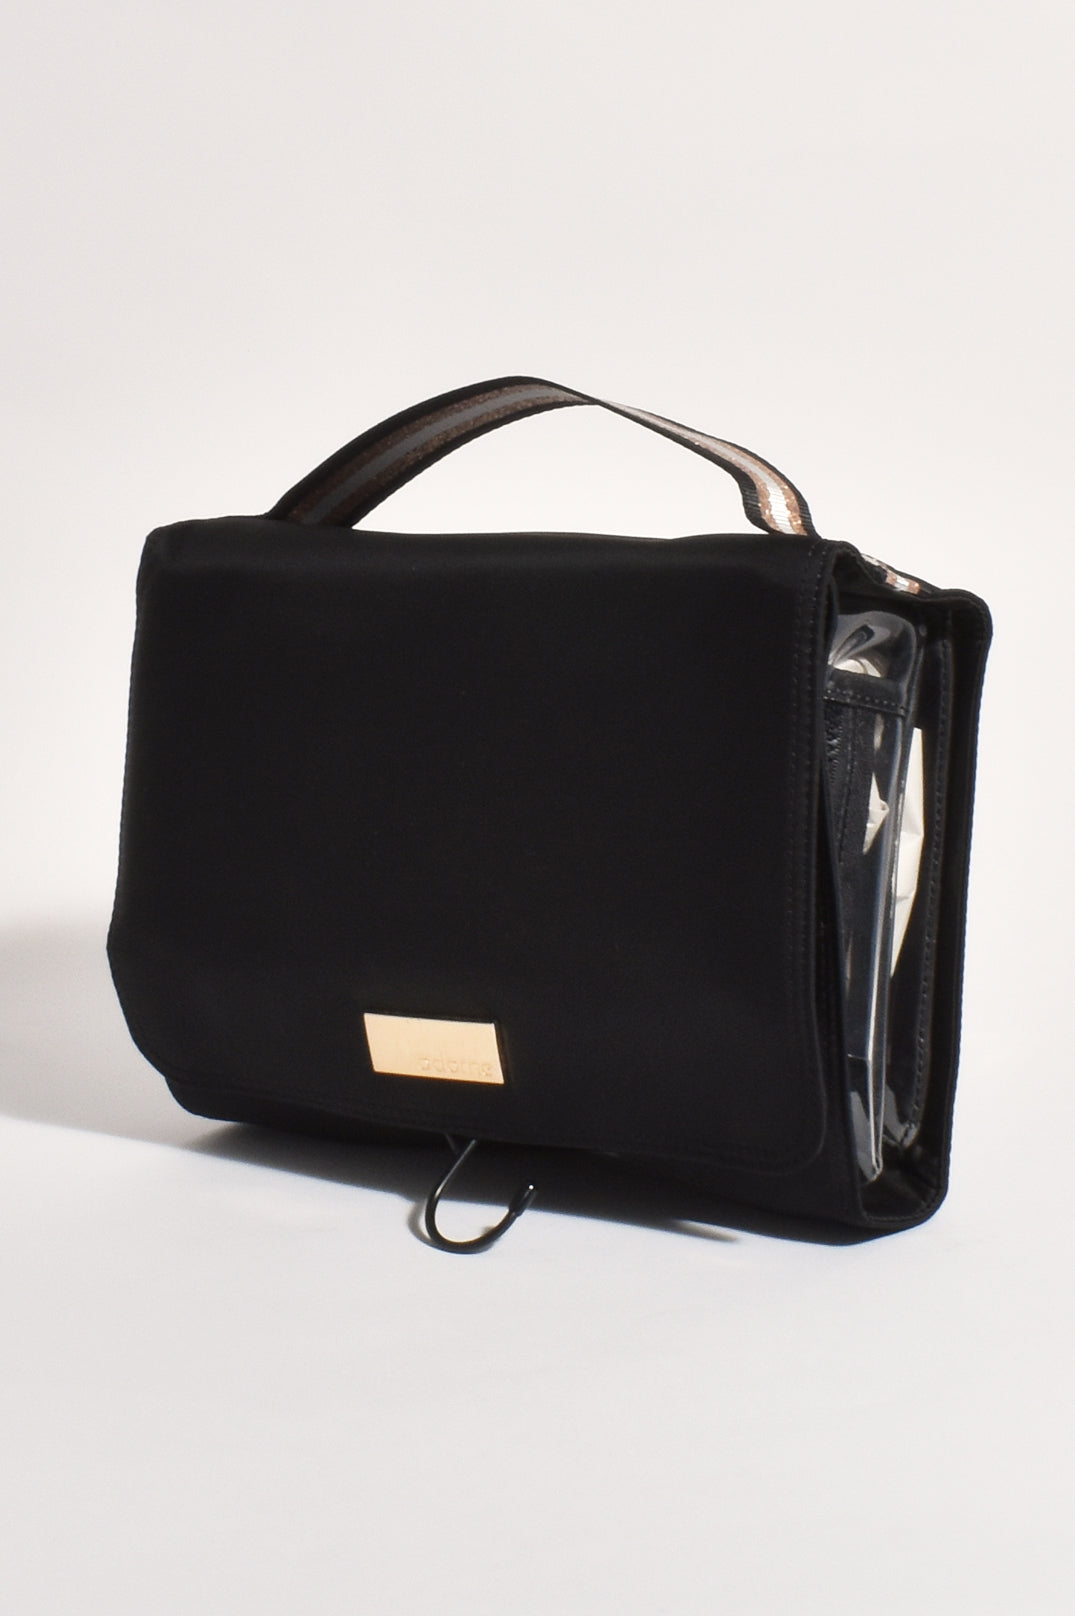 Adorne Morgan Roll Up Cosmetic Bag - Black or Fushia Orange